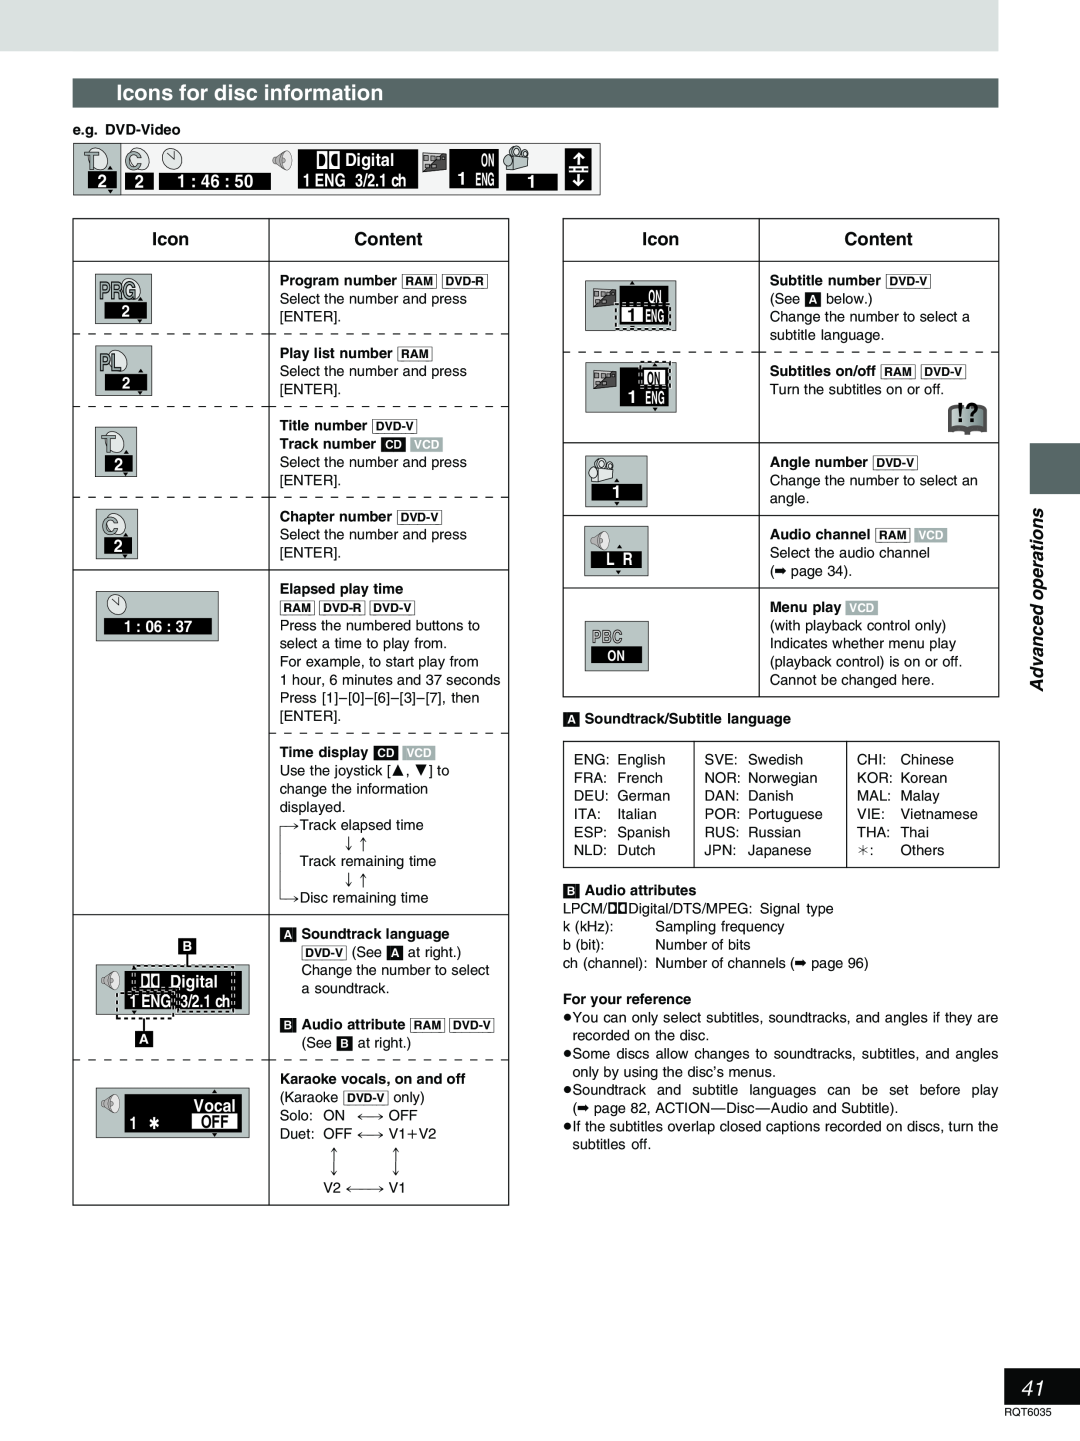 Panasonic DMR-E20 Icons for disc information, ÎDigital, 1 46, Content, Î Digital, 3/2.1 ch, Advanced operations, 1 ENG 